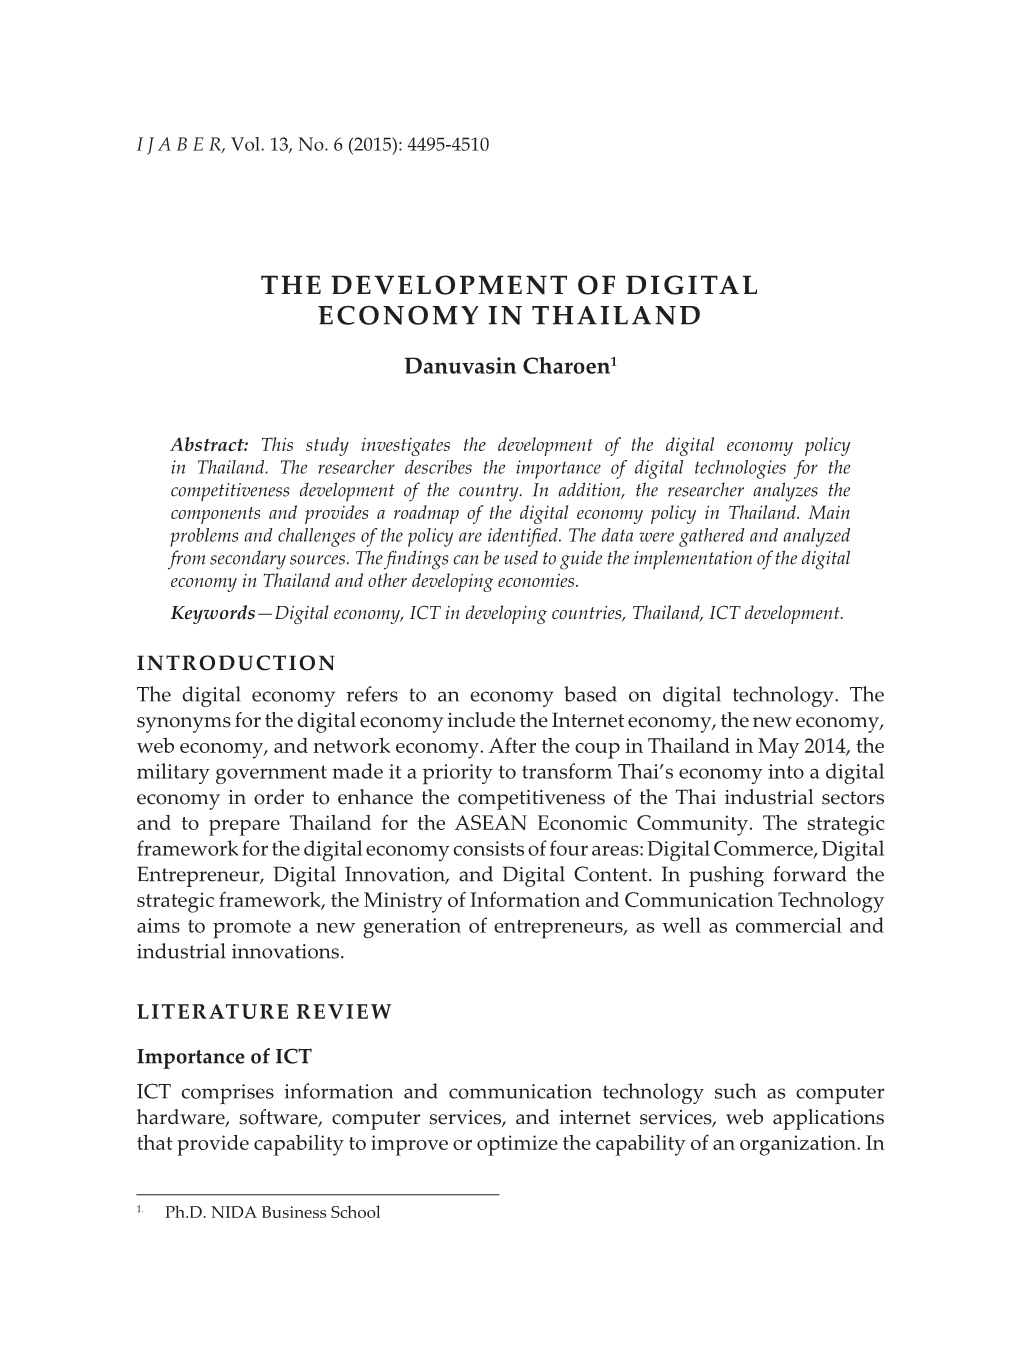 The Development of Digital Economy in Thailand